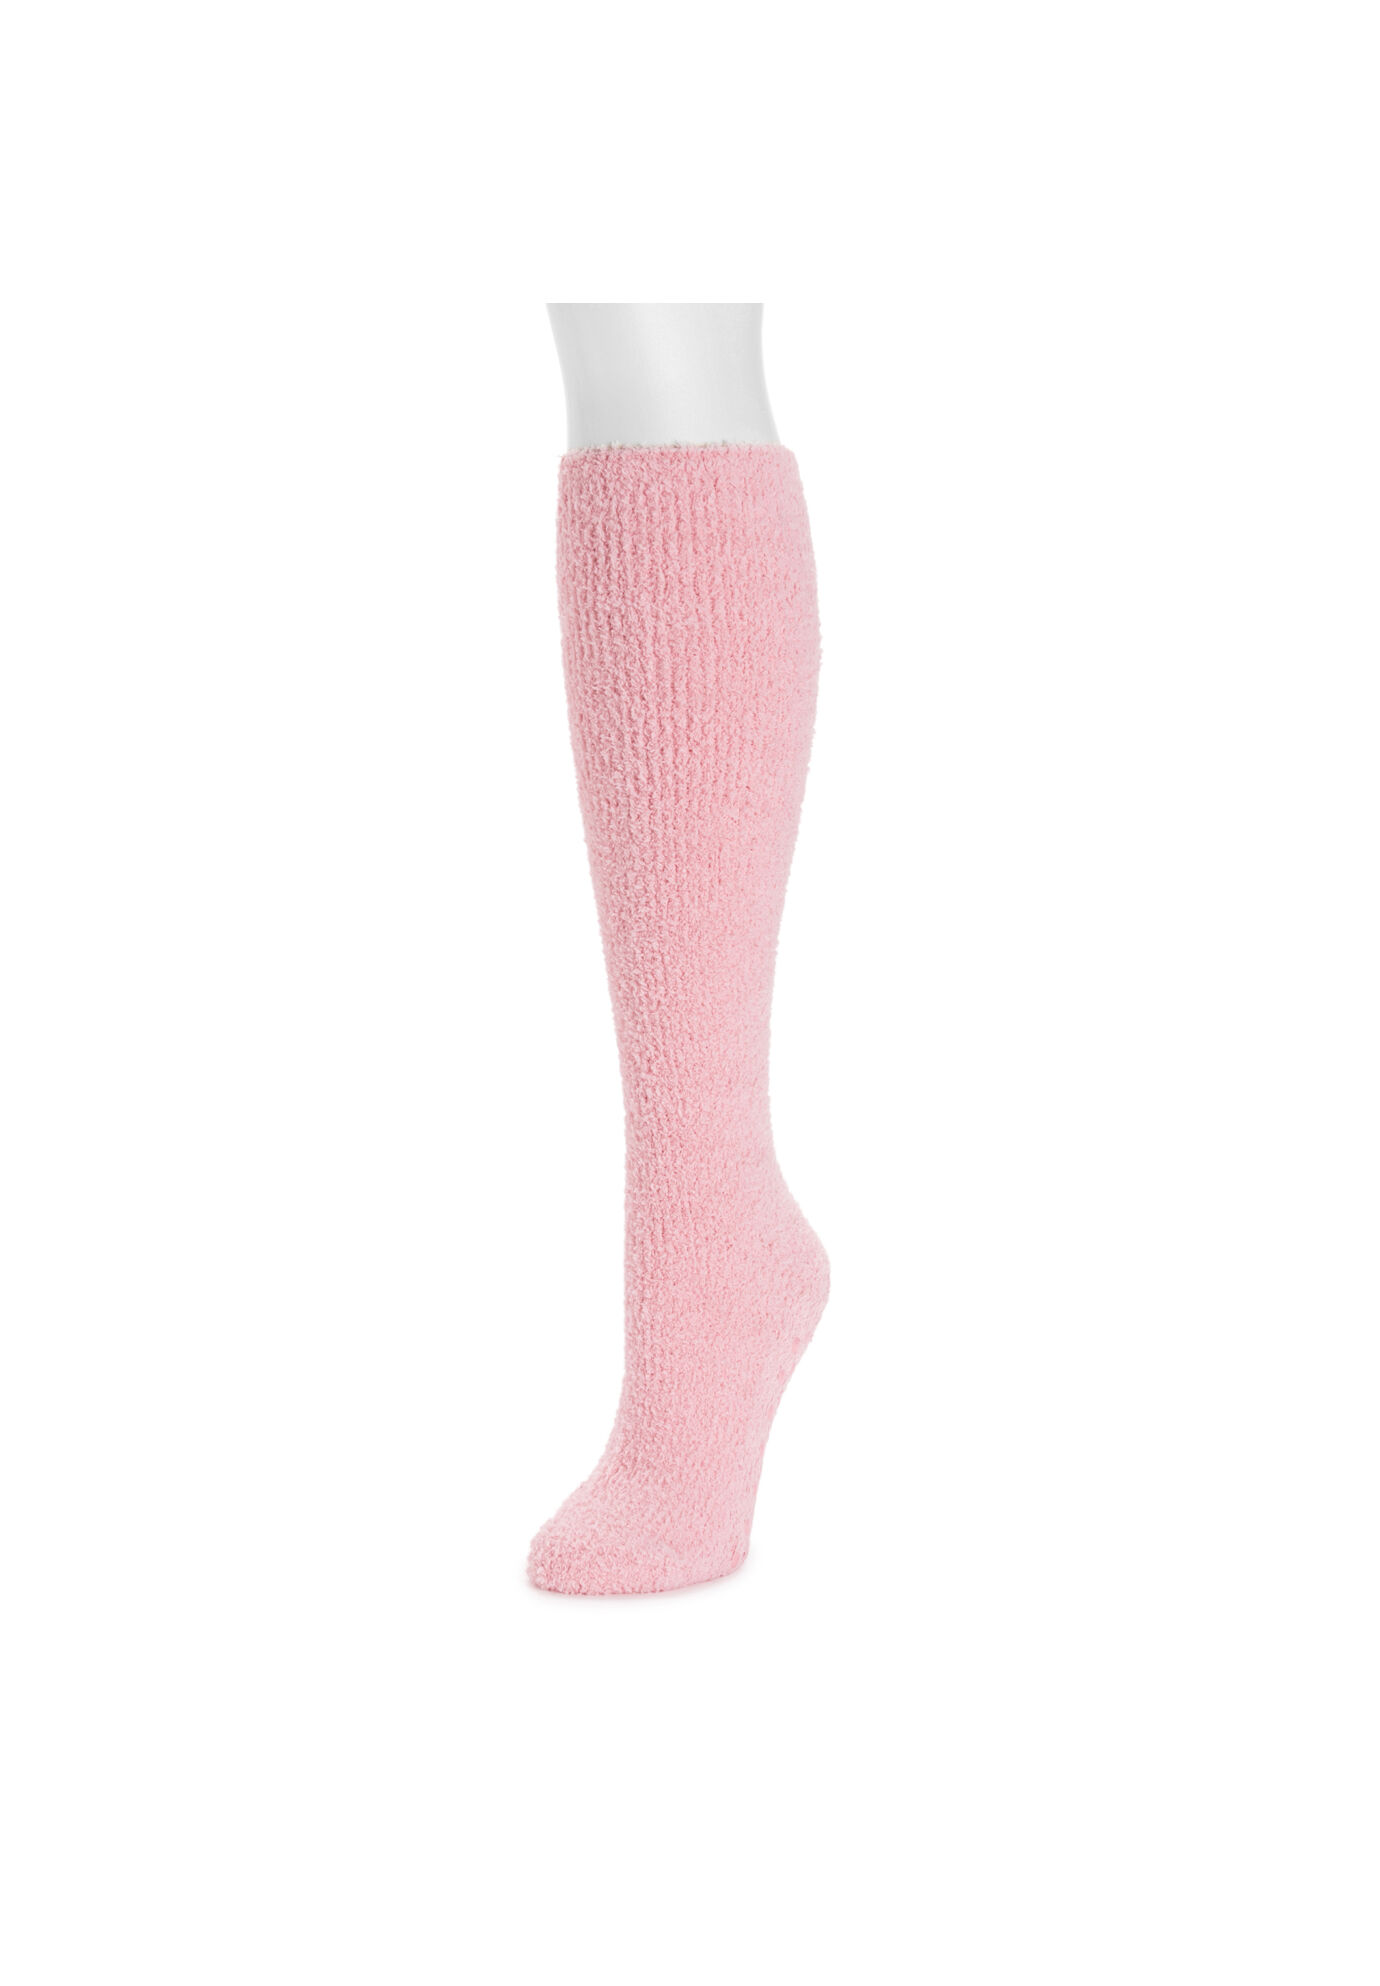 Buy UGG Women's Cozy Chenille Sock, Black / Grey, One Size at Amazon.in